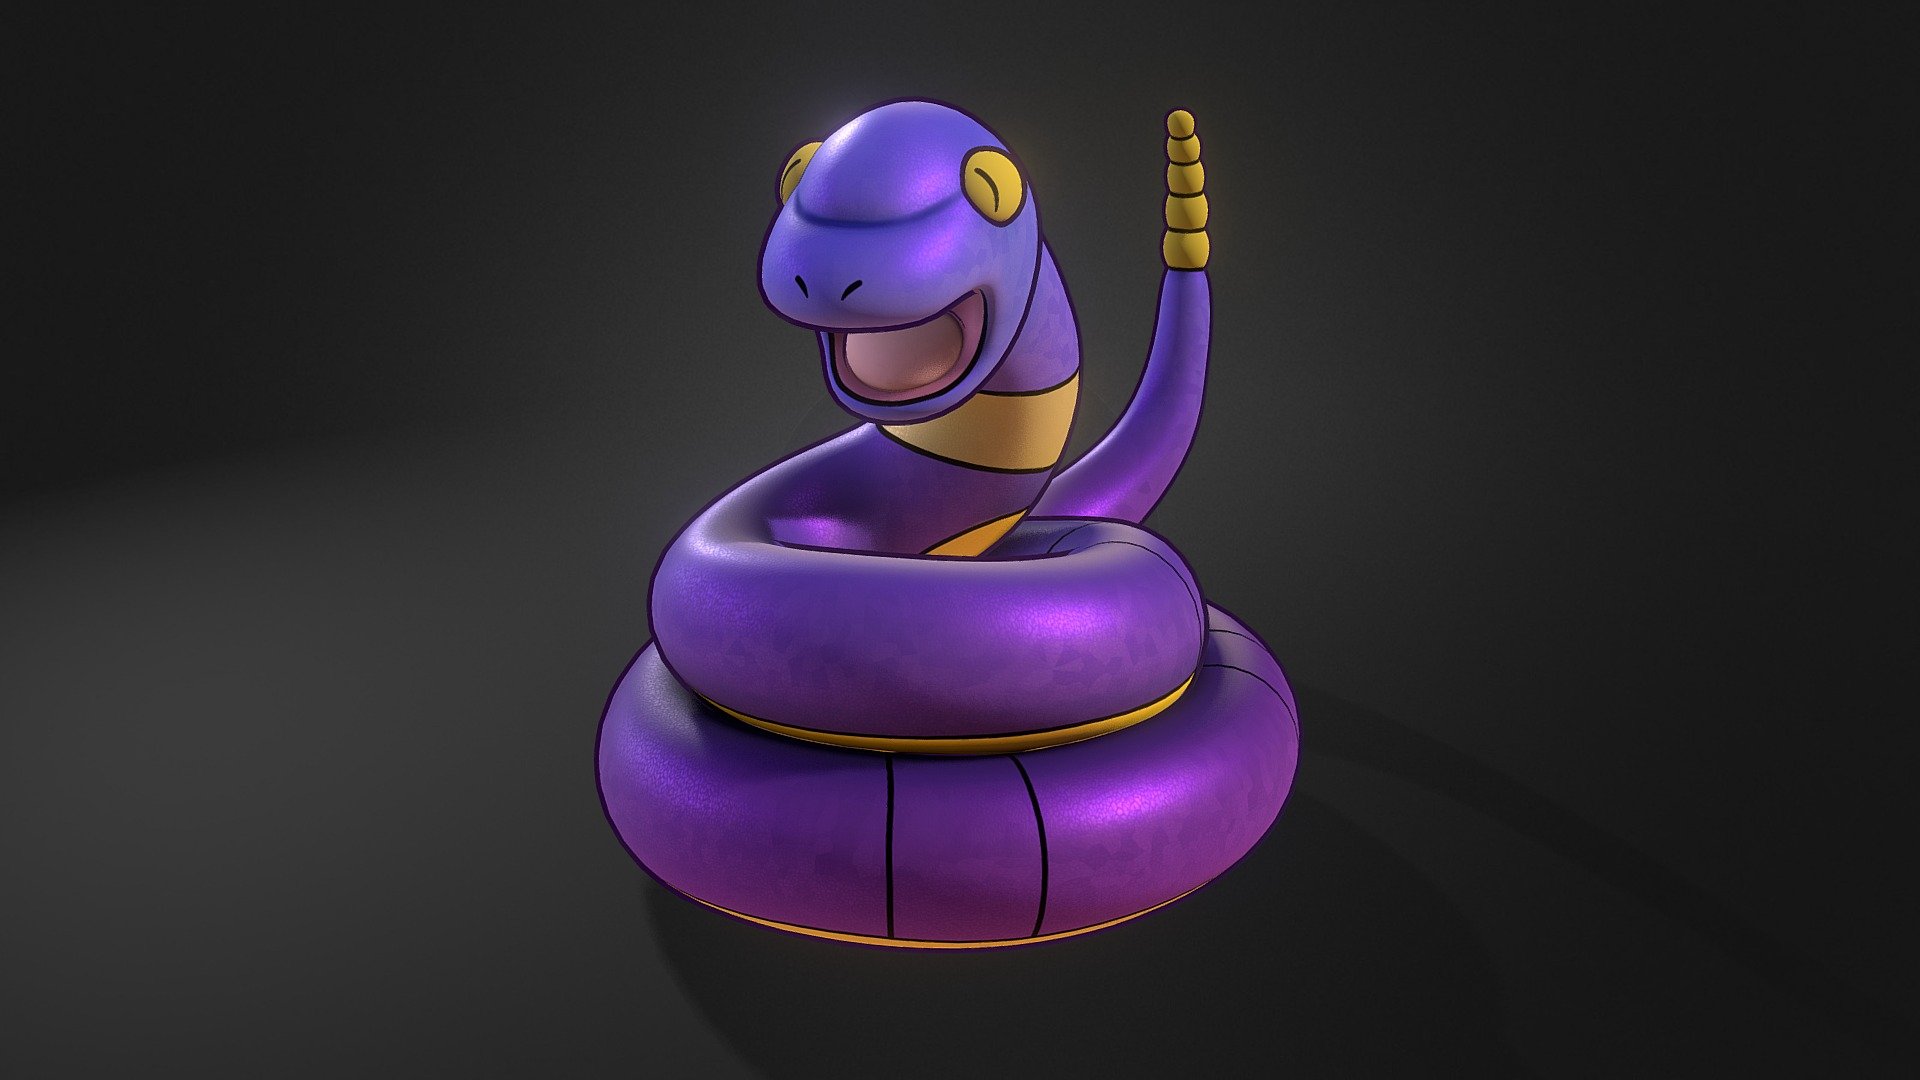 The poo-shaped one - Ekans Pokemon - 3D model by 3dlogicus 3d model